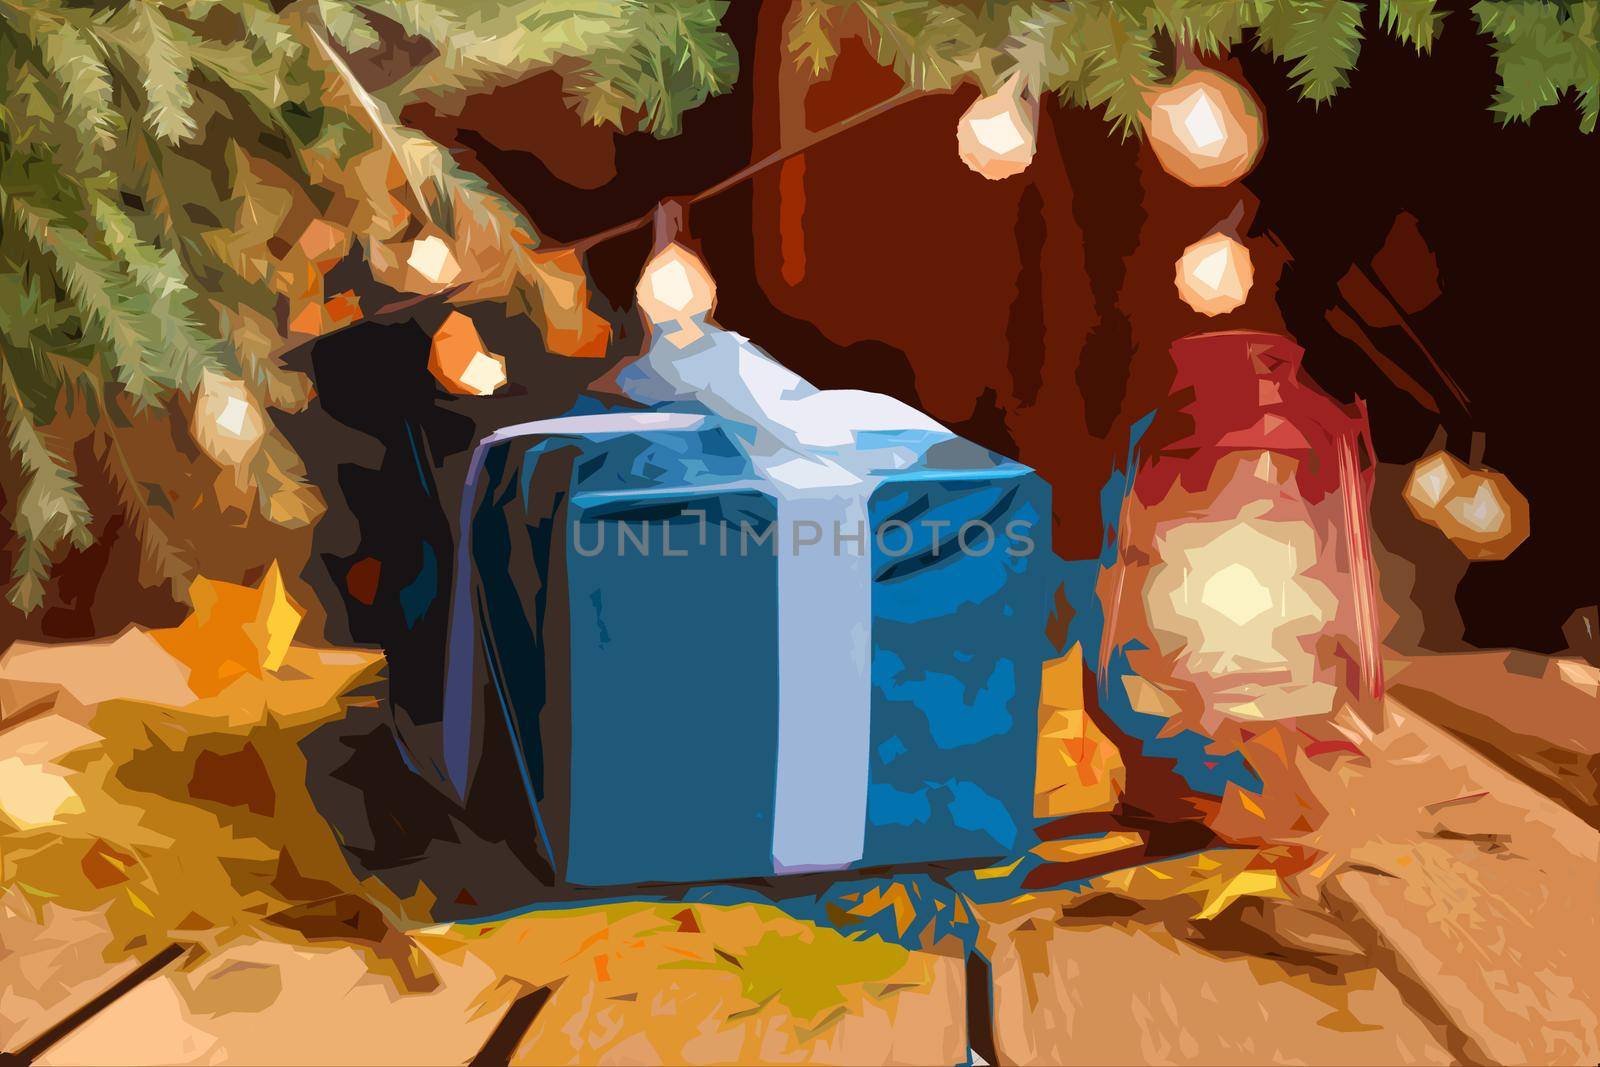 Christmas card with gifts, Christmas tree